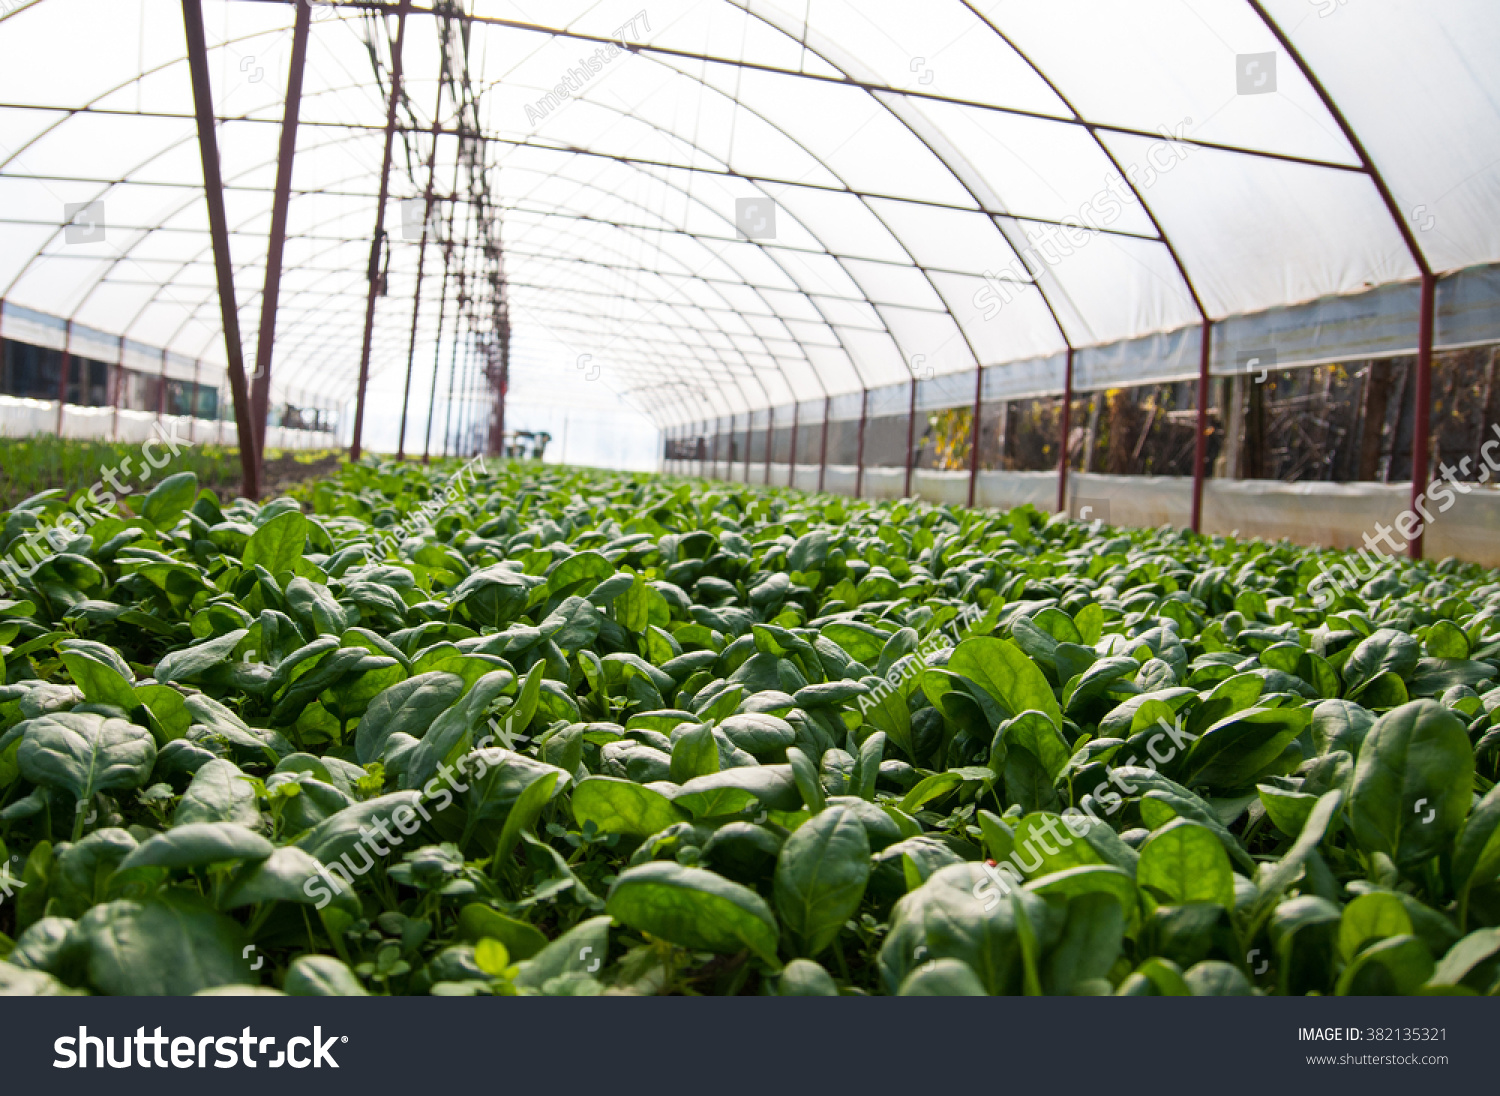 Spinach Plantation Modern Greenhouse Stock Photo 382135321 | Shutterstock